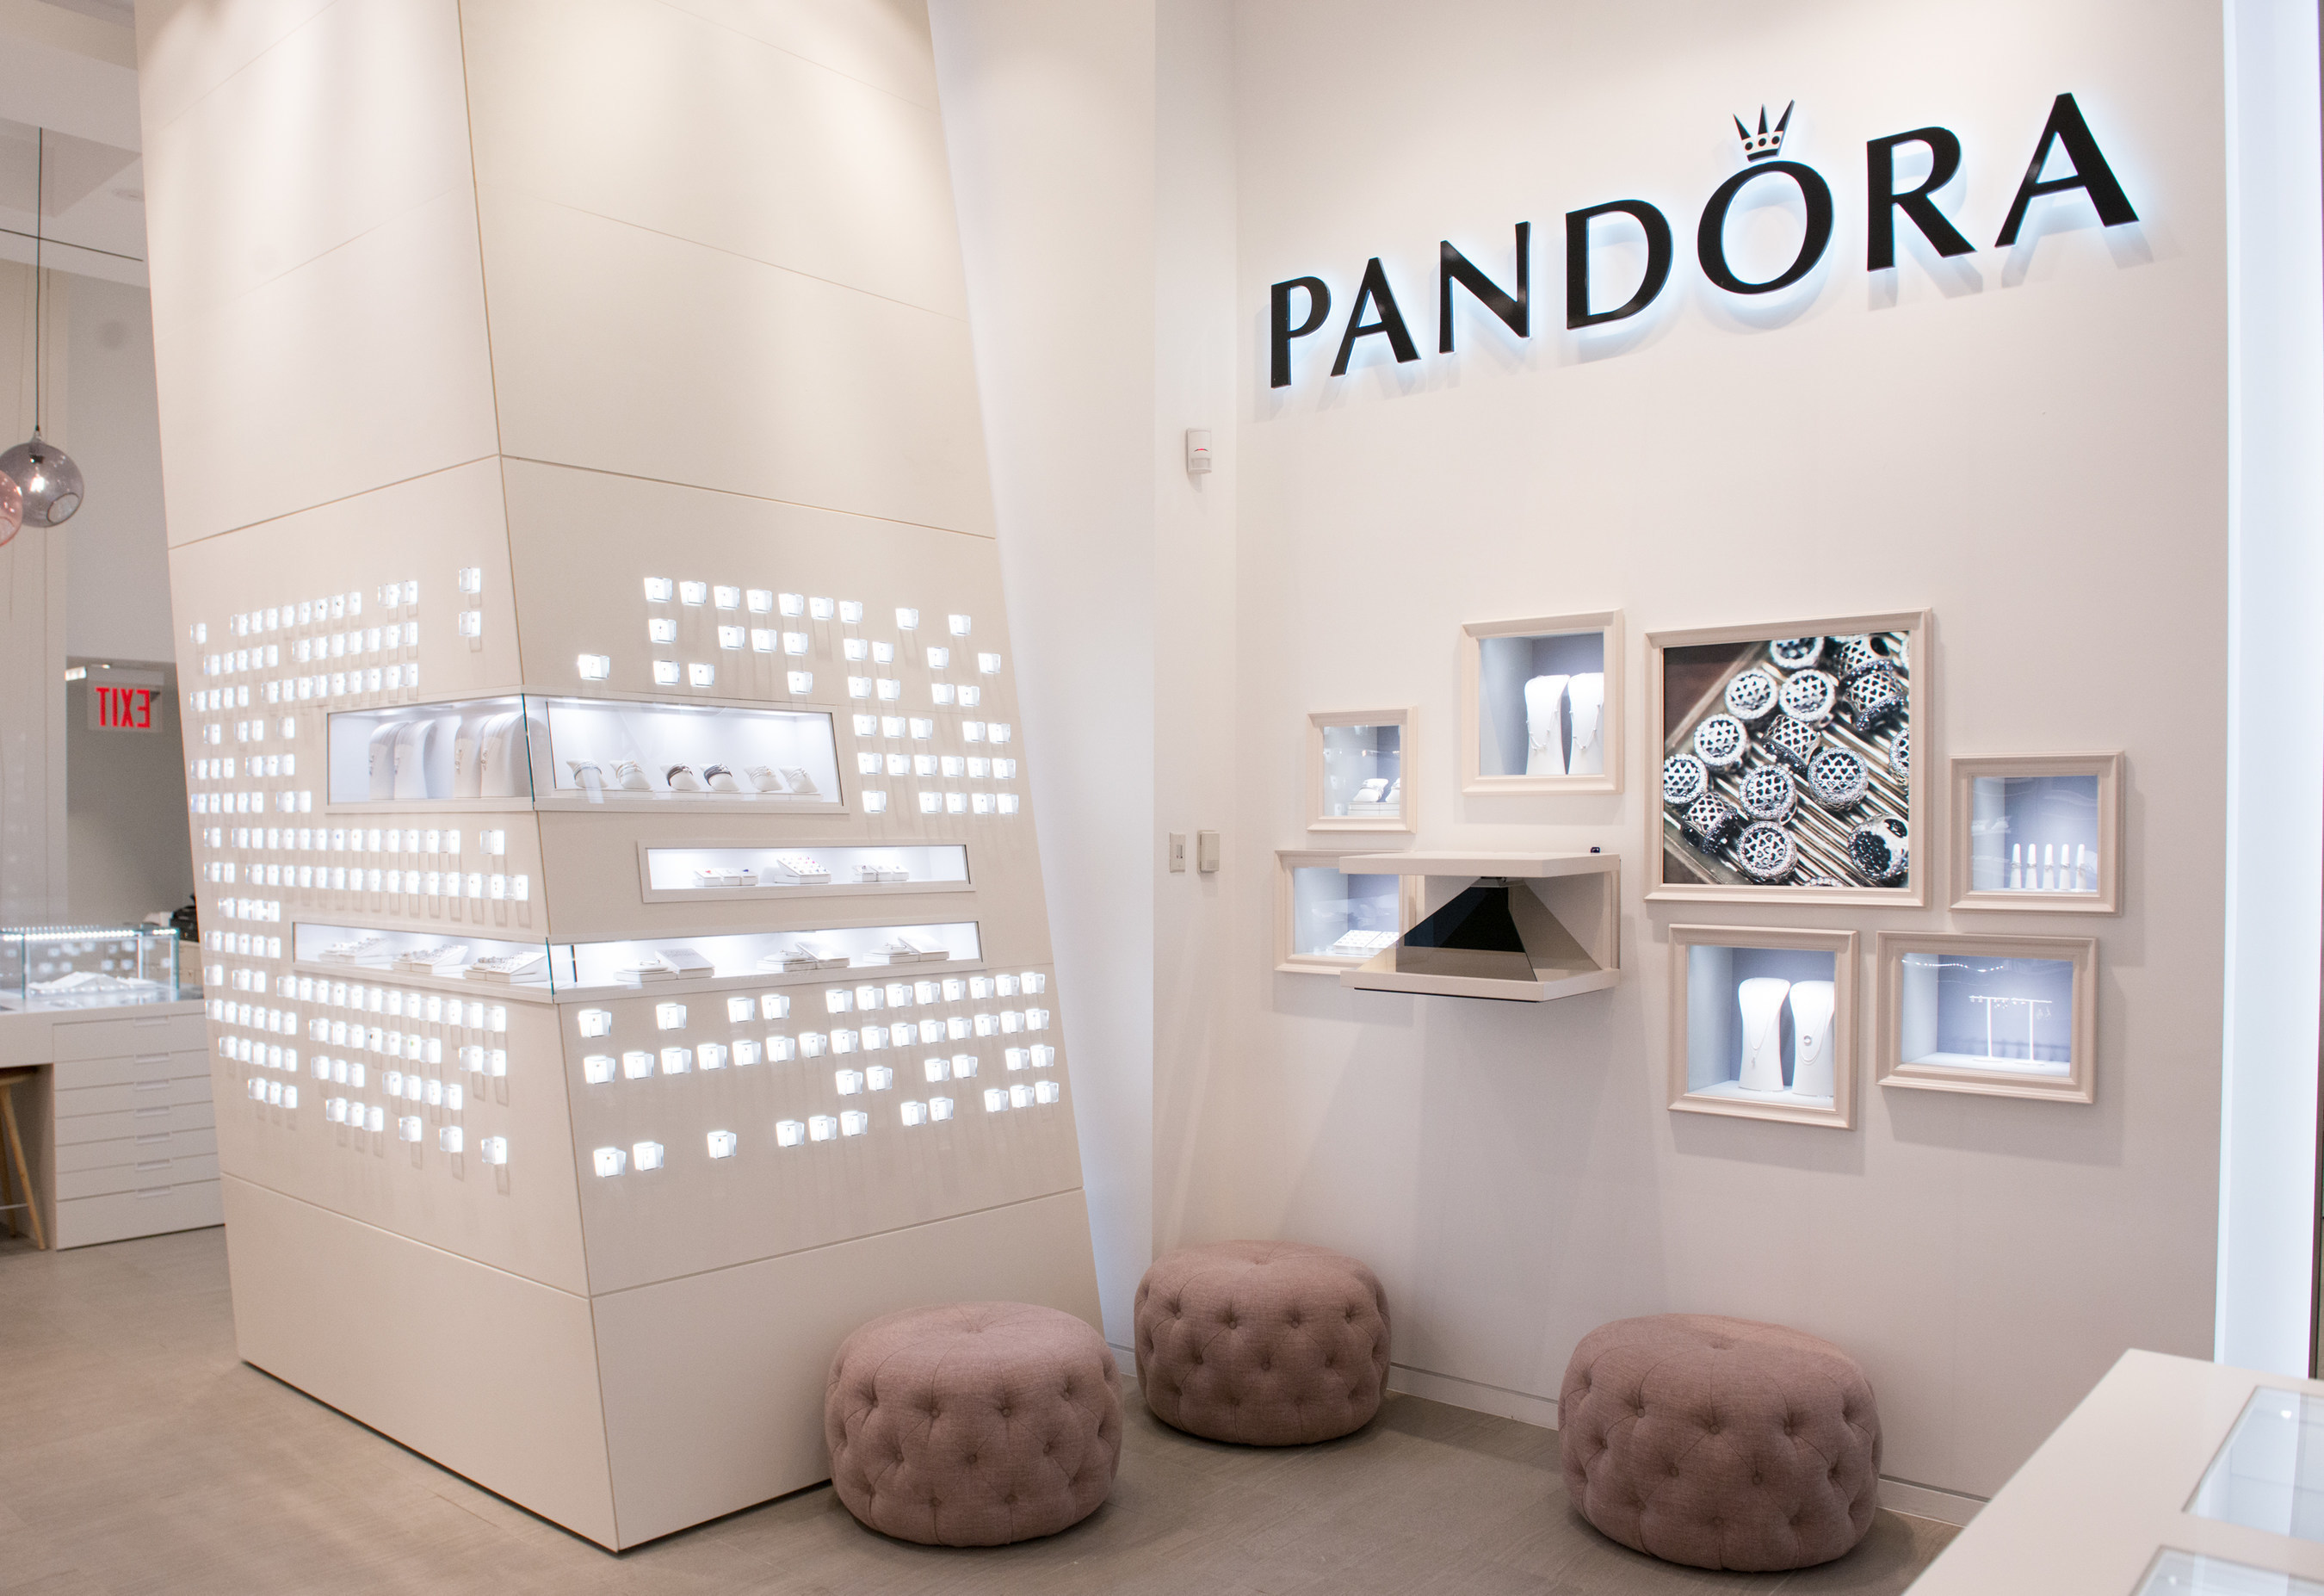 PANDORA Jewelry Opens New Store at Westfield World Trade Center